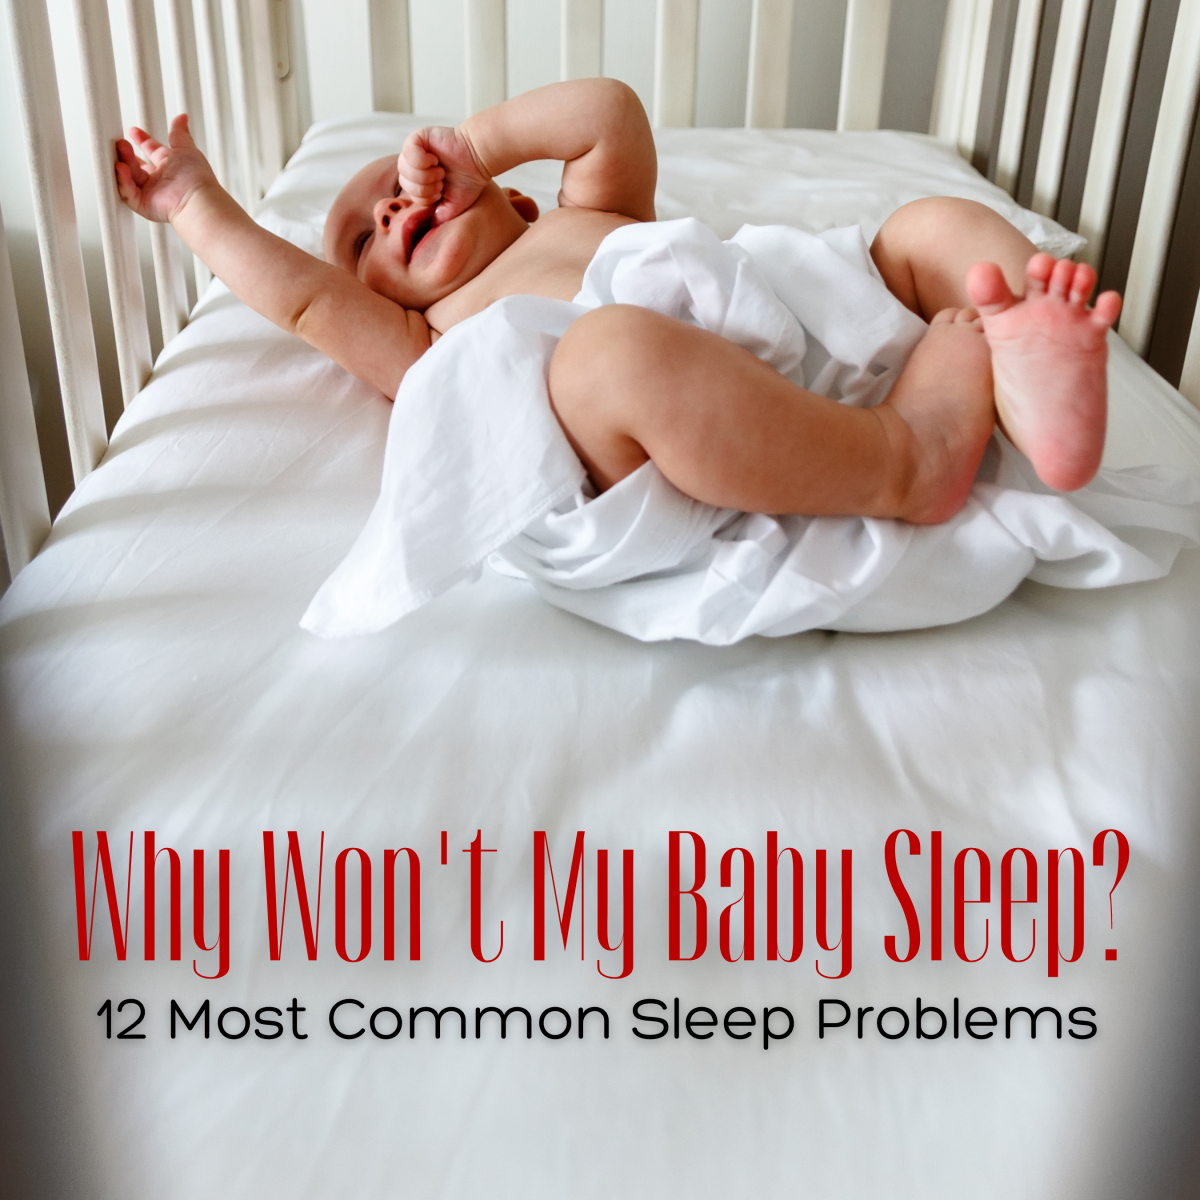 Why won't my baby sleep? 12 most common sleep problems.